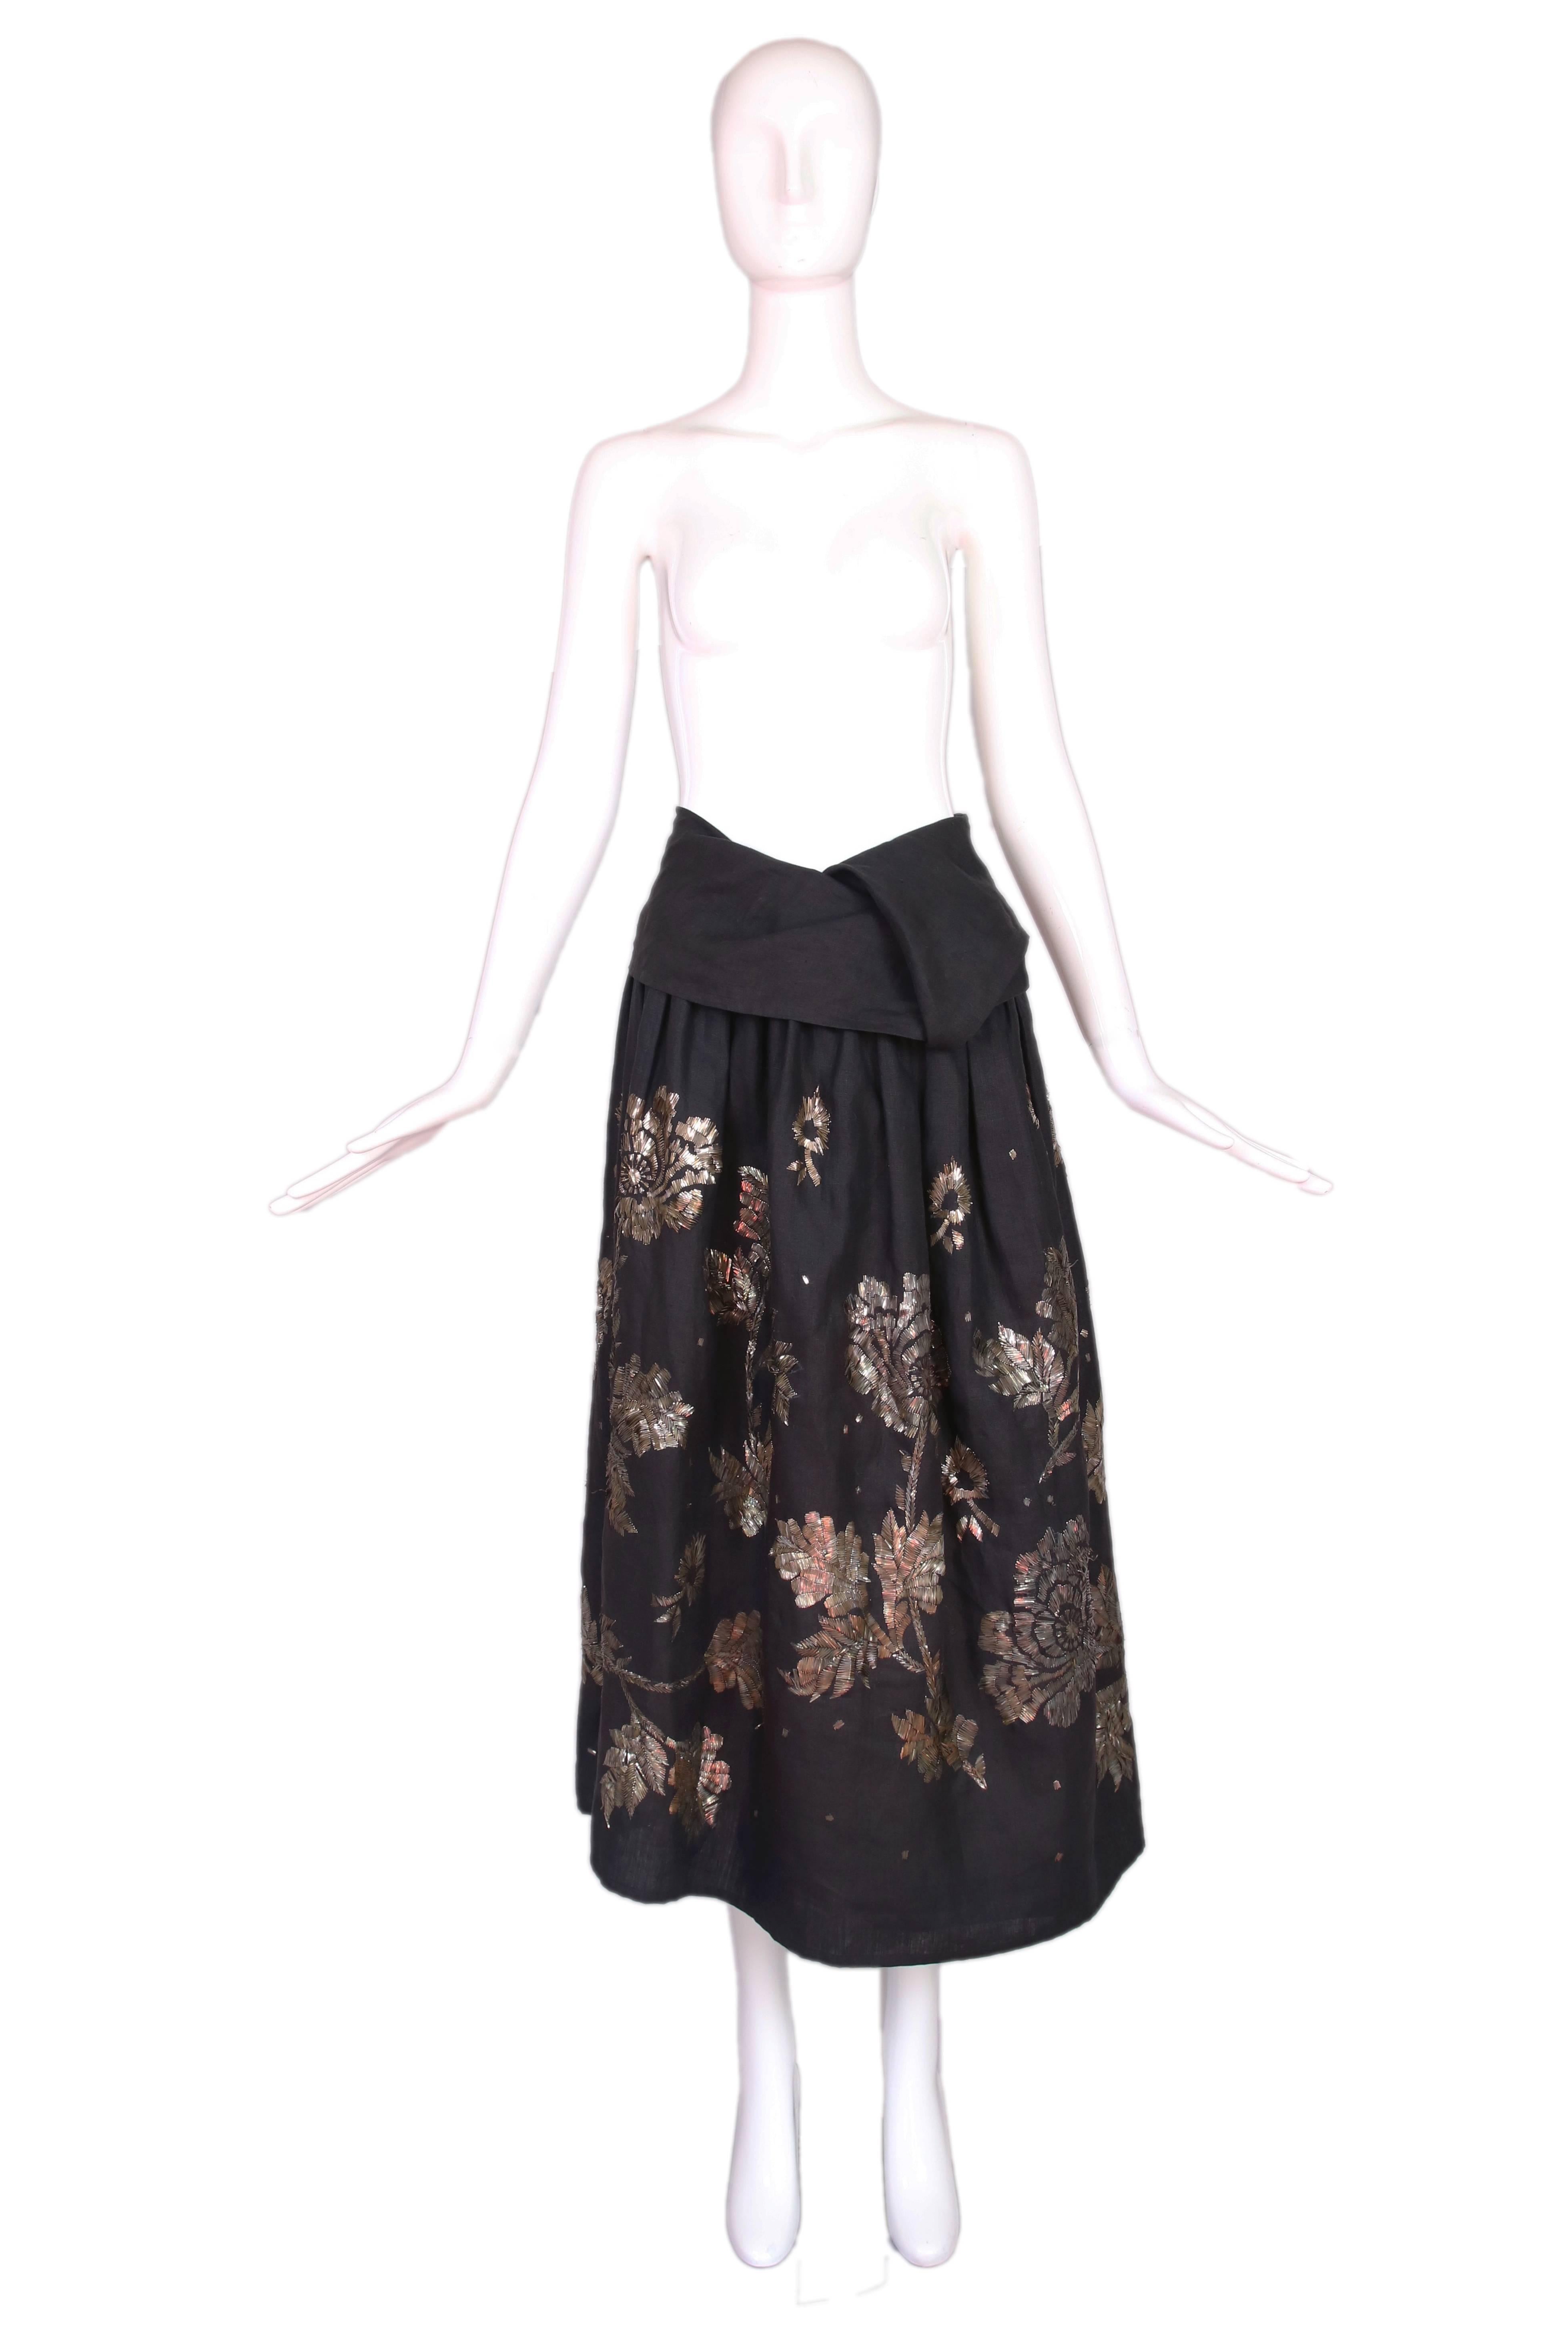 Dries Van Noten black linen skirt w/metallic flower embroidery throughout. Size EU 42. In excellent condition.
MEASUREMENTS: 
Waist - 28